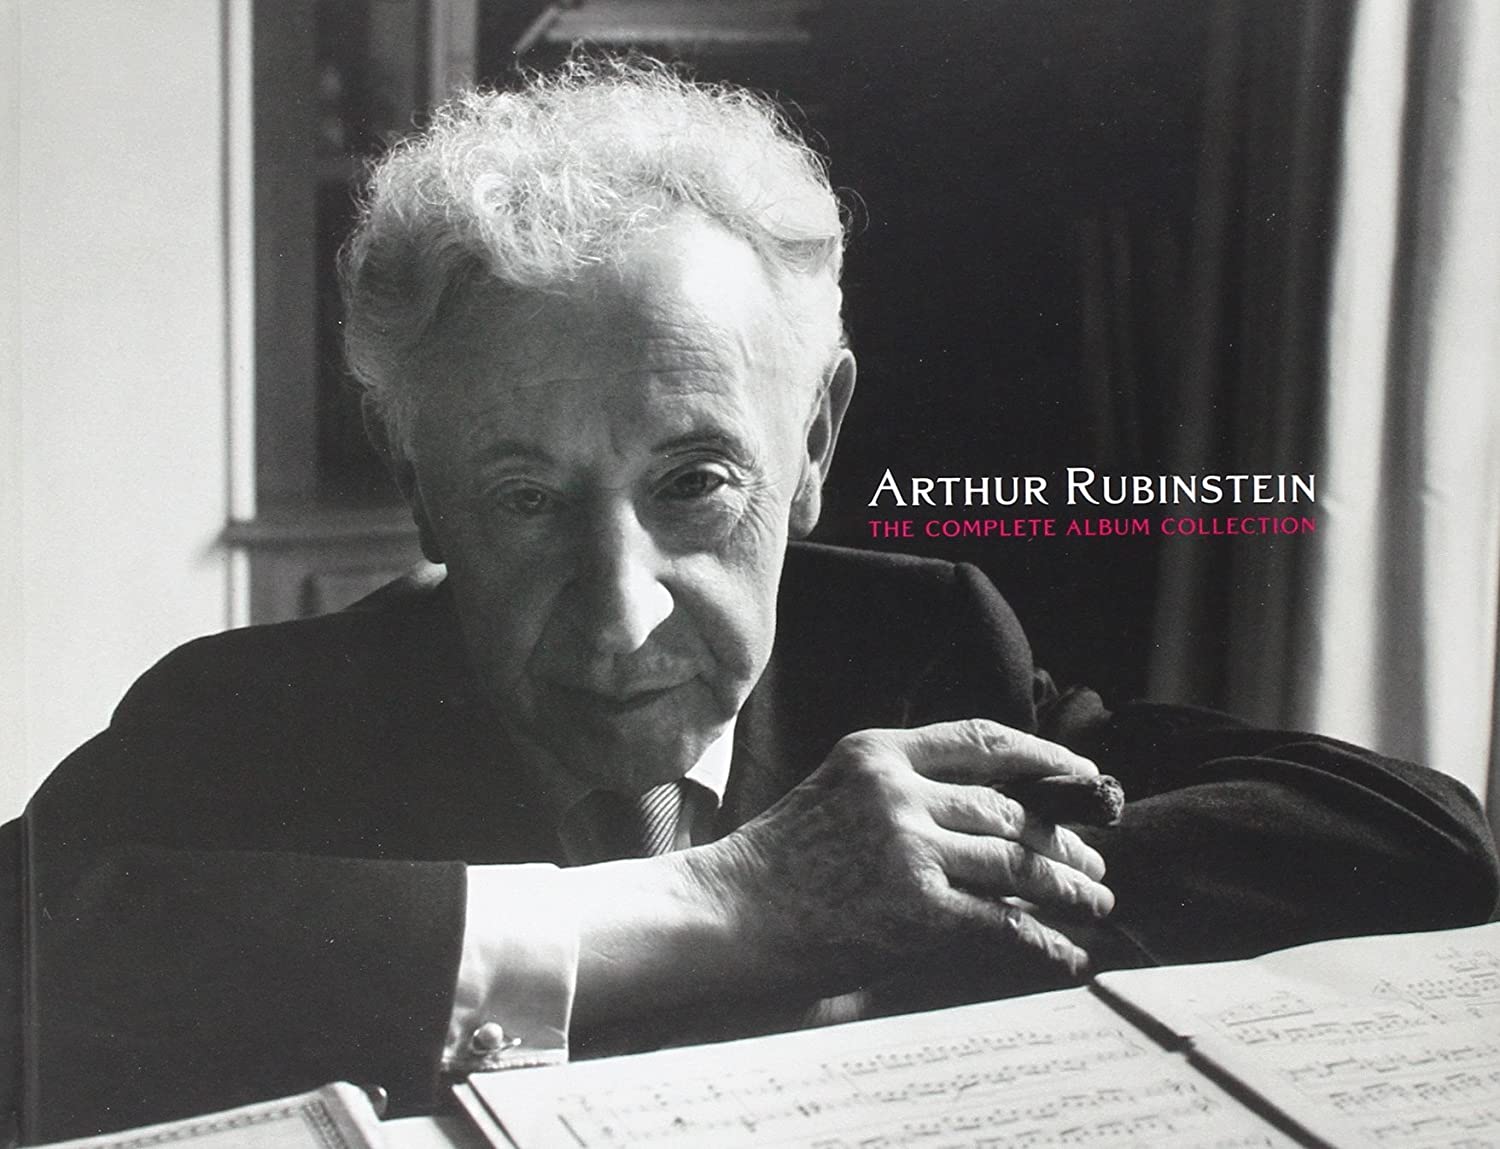 Acquisition Spotlight: The Archives of Composer Arthur B. Rubinstein